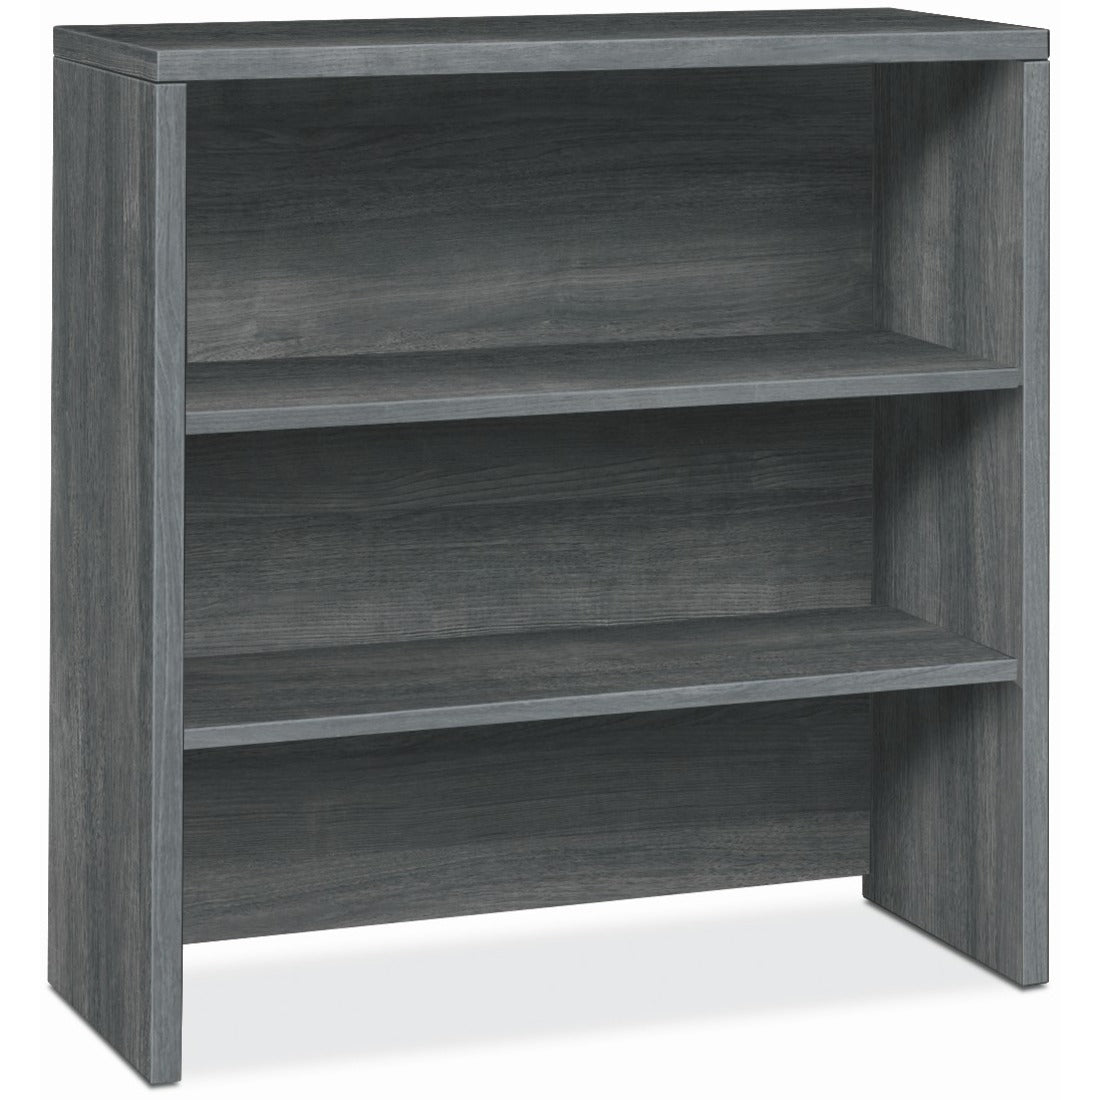 hon-10500-bookcase-36-x-146371-2-shelves-material-laminate-finish-sterling-ash-leveling-glide-adjustable-shelf-cable-management_hon105292ls1 - 1